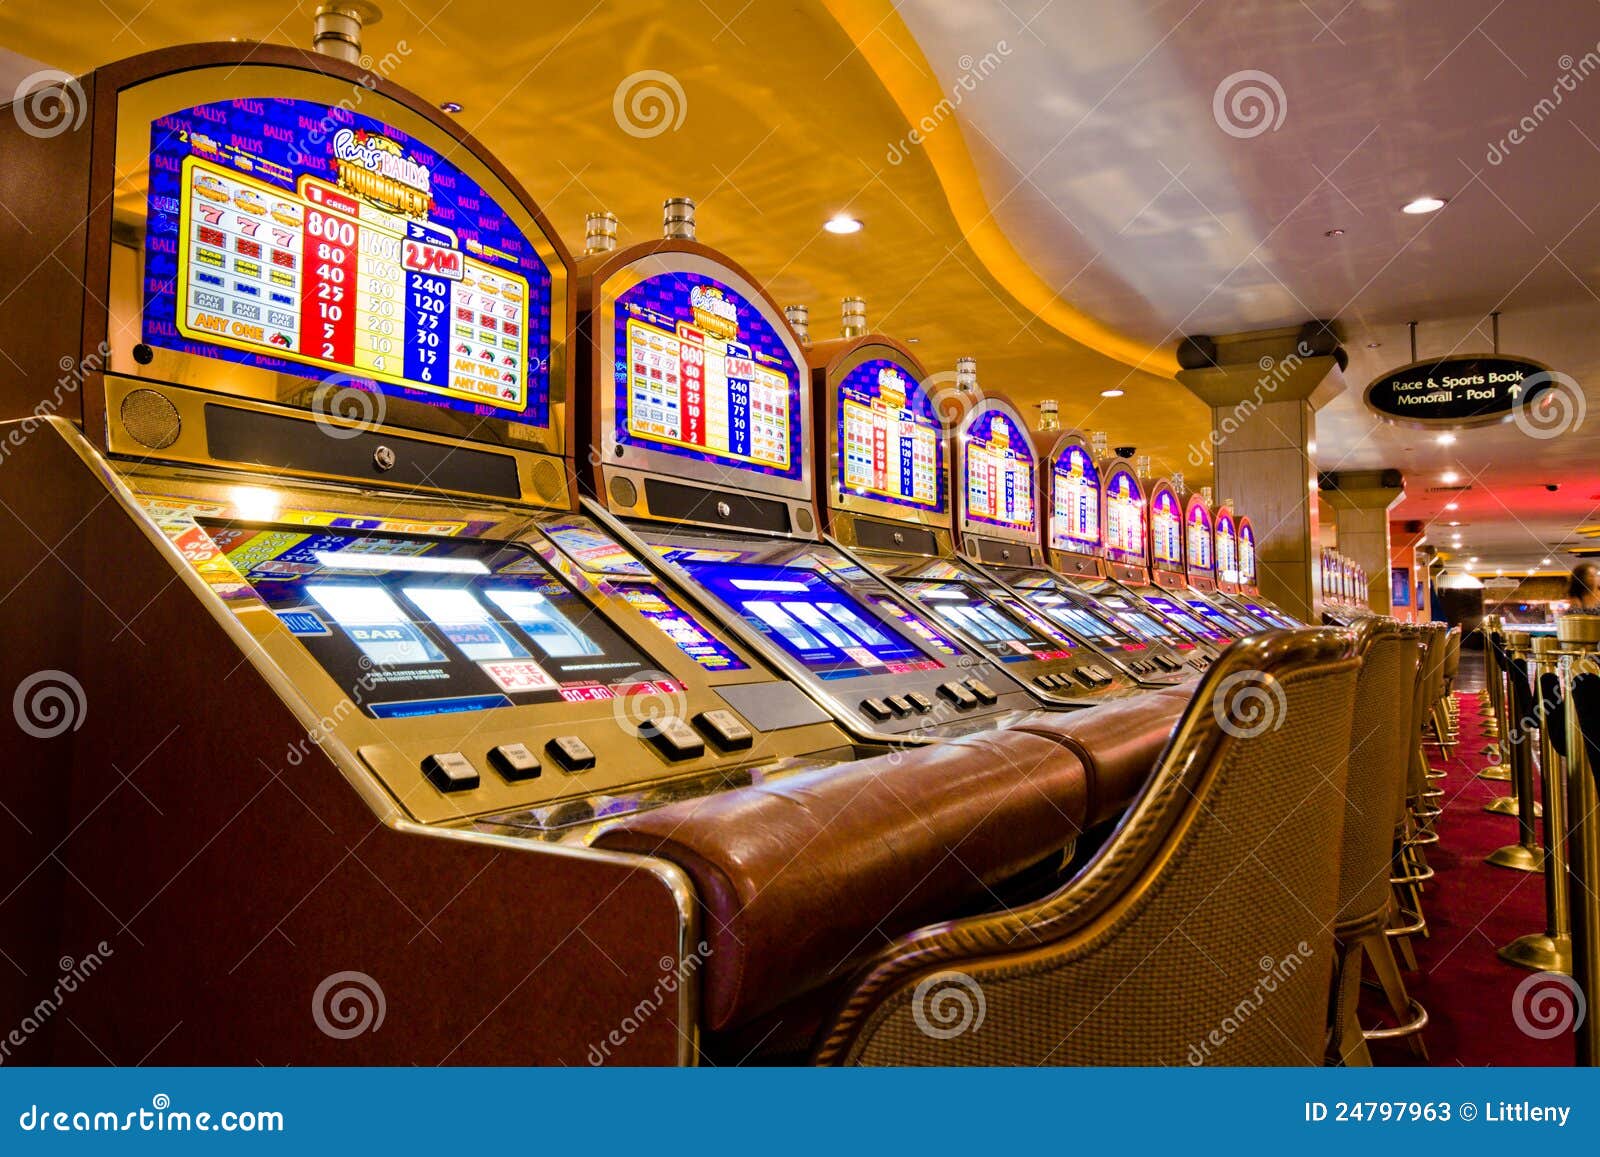 1,381 Las Vegas Slot Machine Stock Photos - Free & Royalty-Free Stock  Photos from Dreamstime